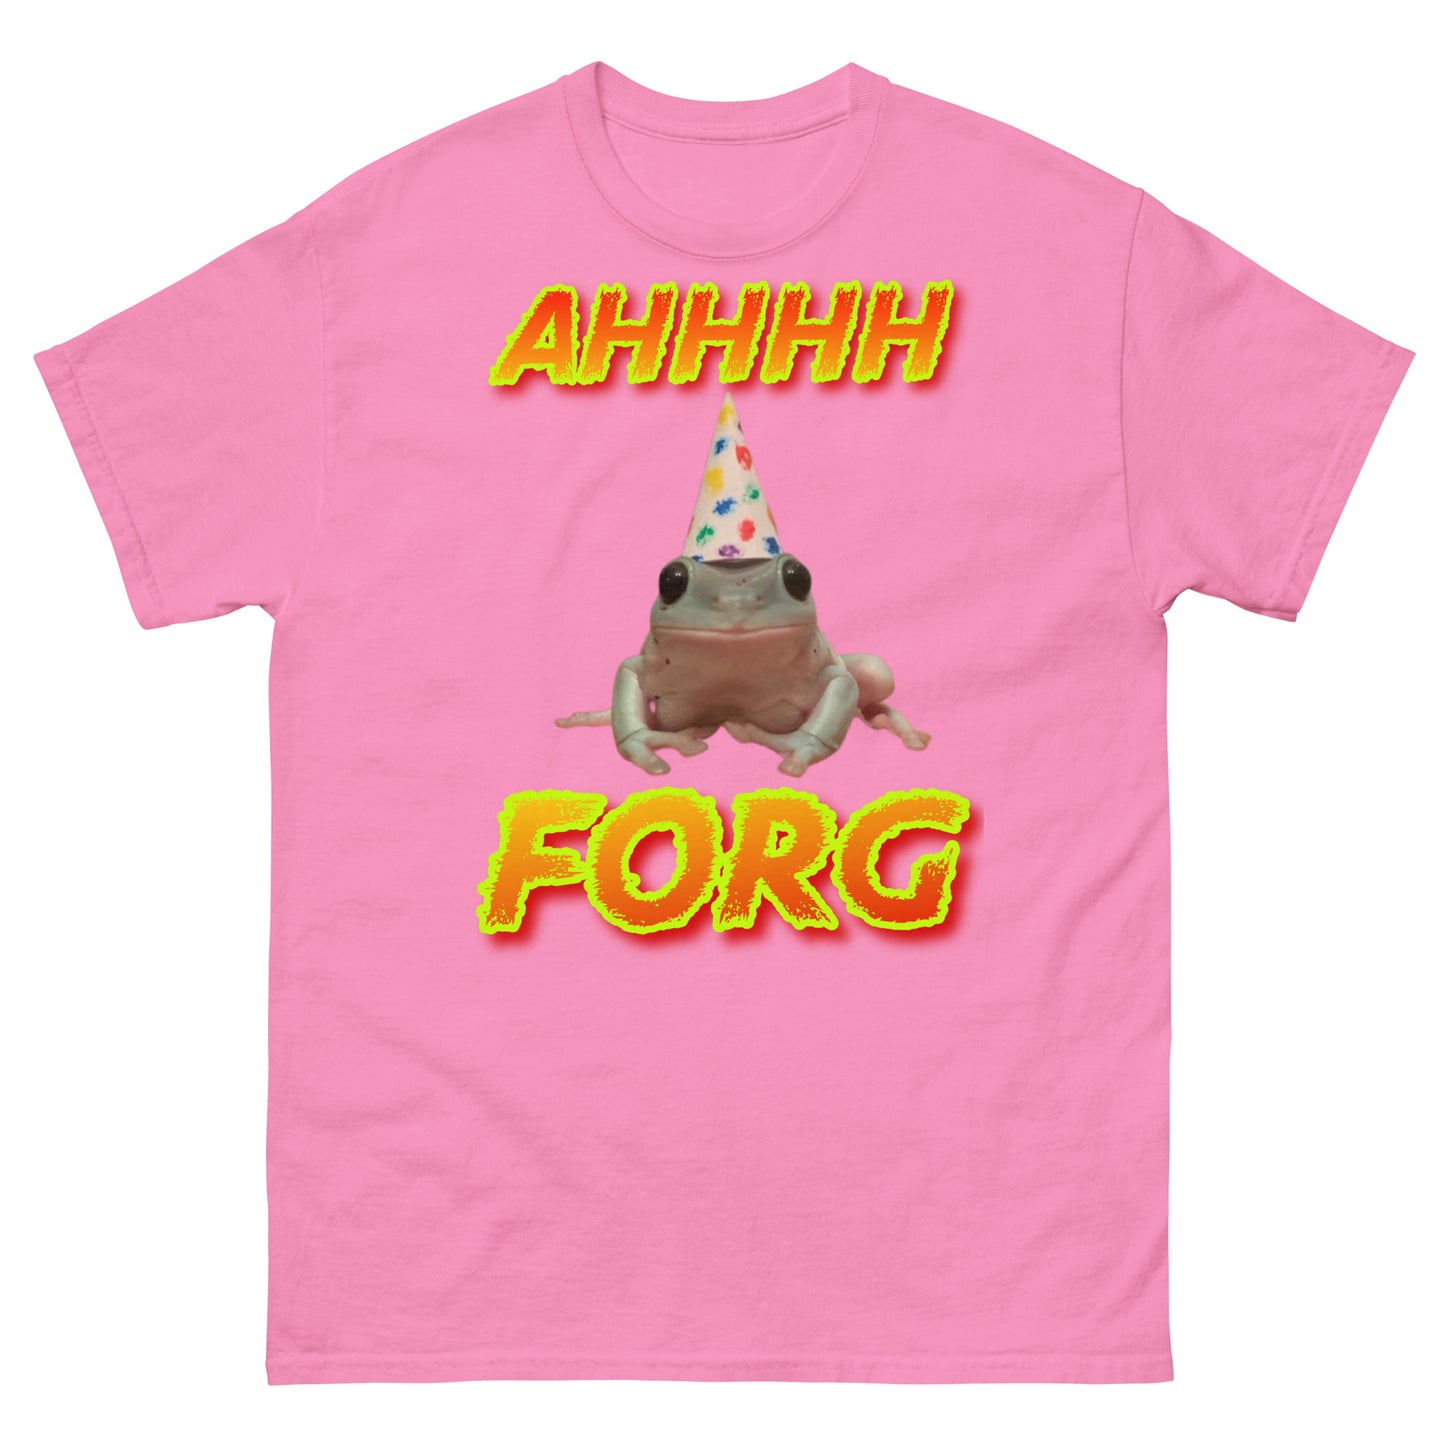 Frog / Forg Cringey Tee (Clean Version)